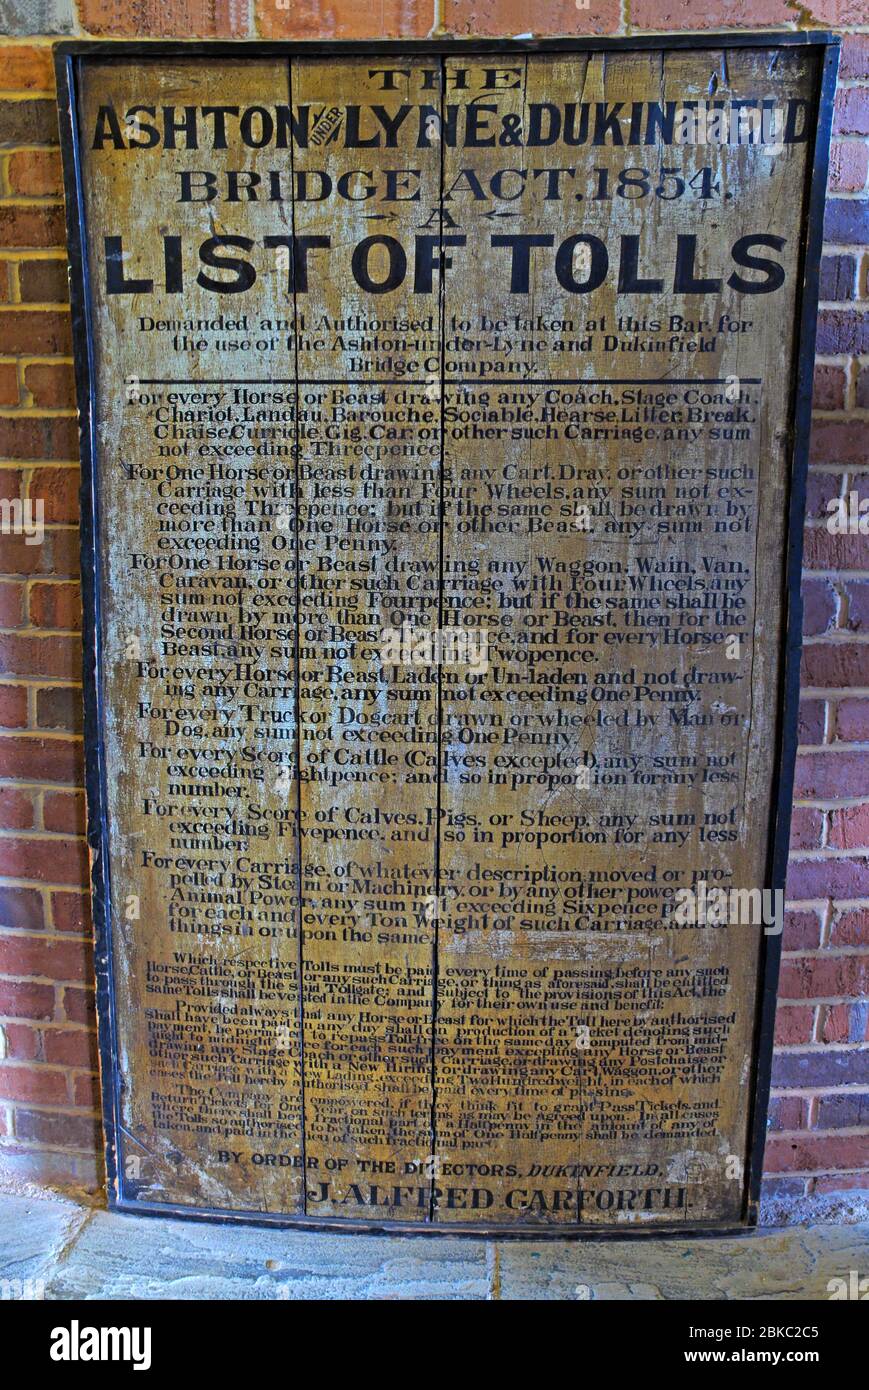 Ashton Under Lyne,Dukinfield, Bridge,Tollls , List of Tolls, greater Manchester, GMC, Manchester,England,Uk Stock Photo